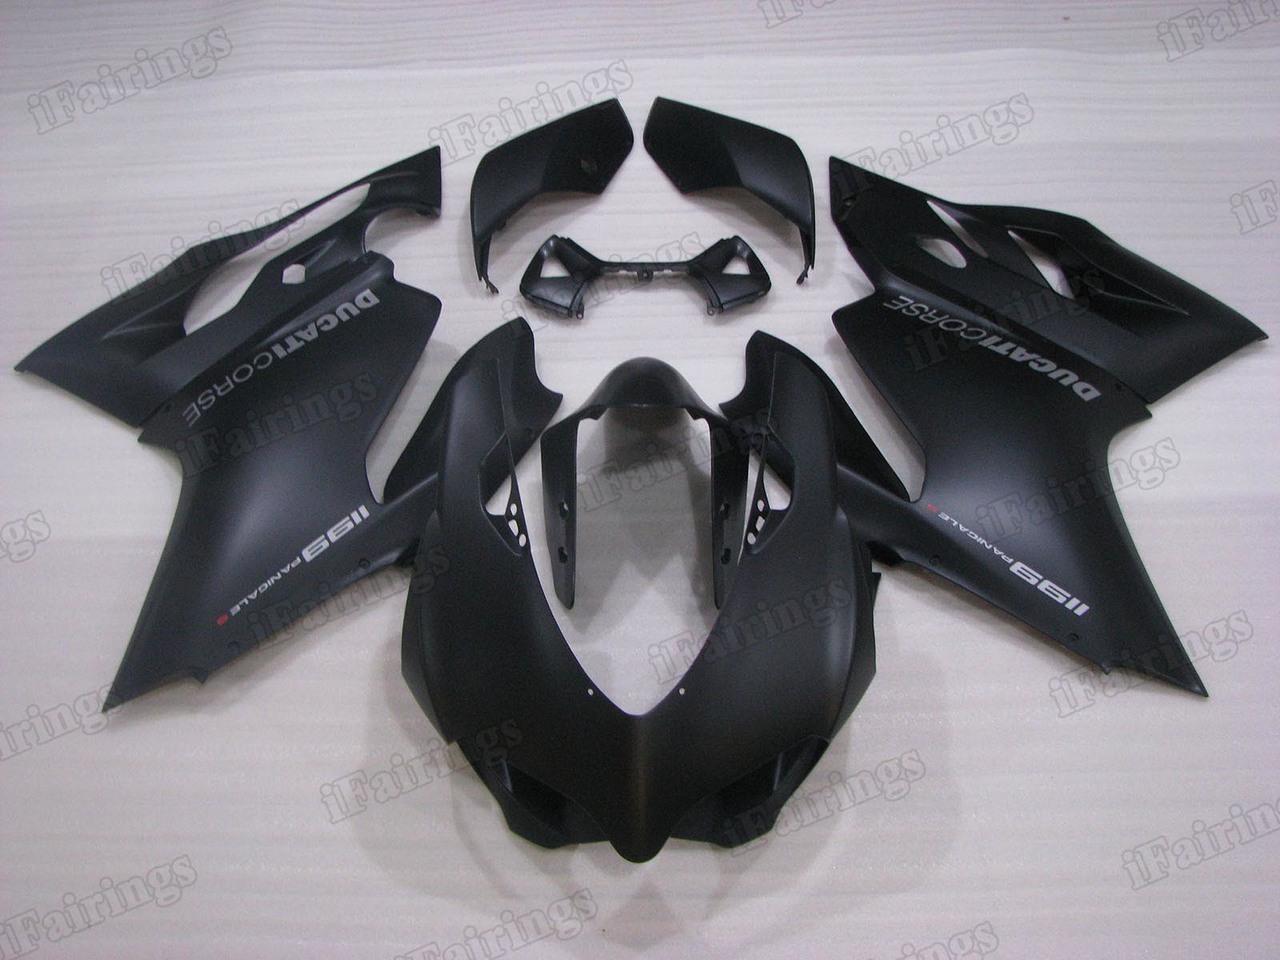 Motorcycle fairings/bodywork for Ducati 899/1199 Panigale matte black color.